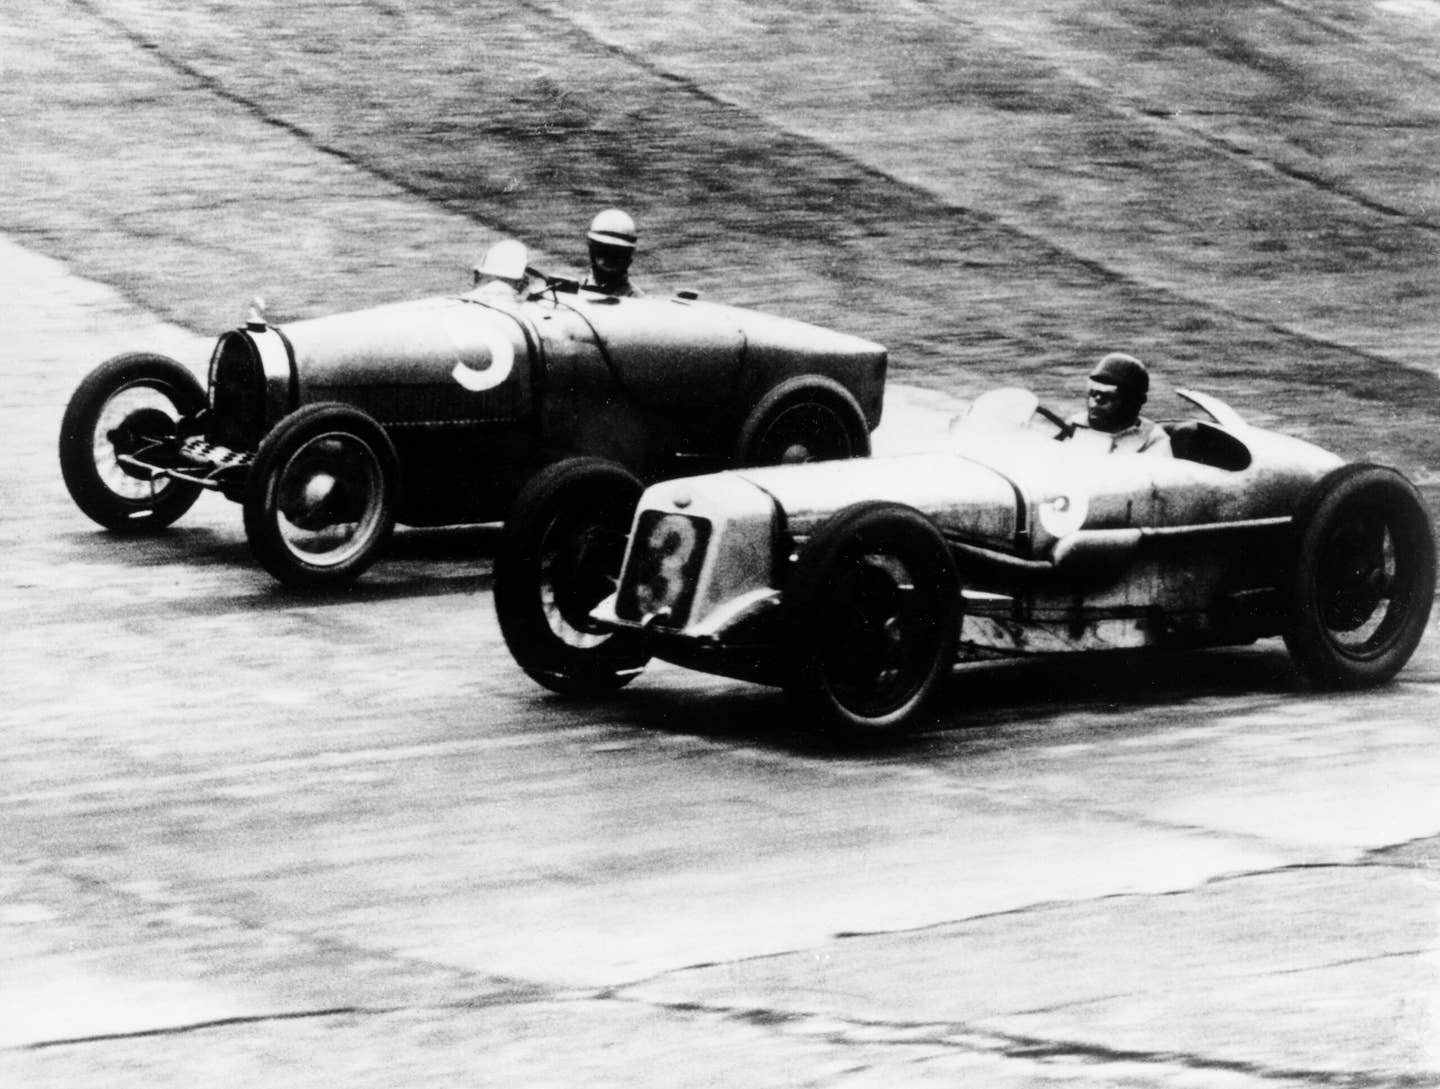 A Delage and a Bugatti race at the British Grand Prix, 1927. Getty Images